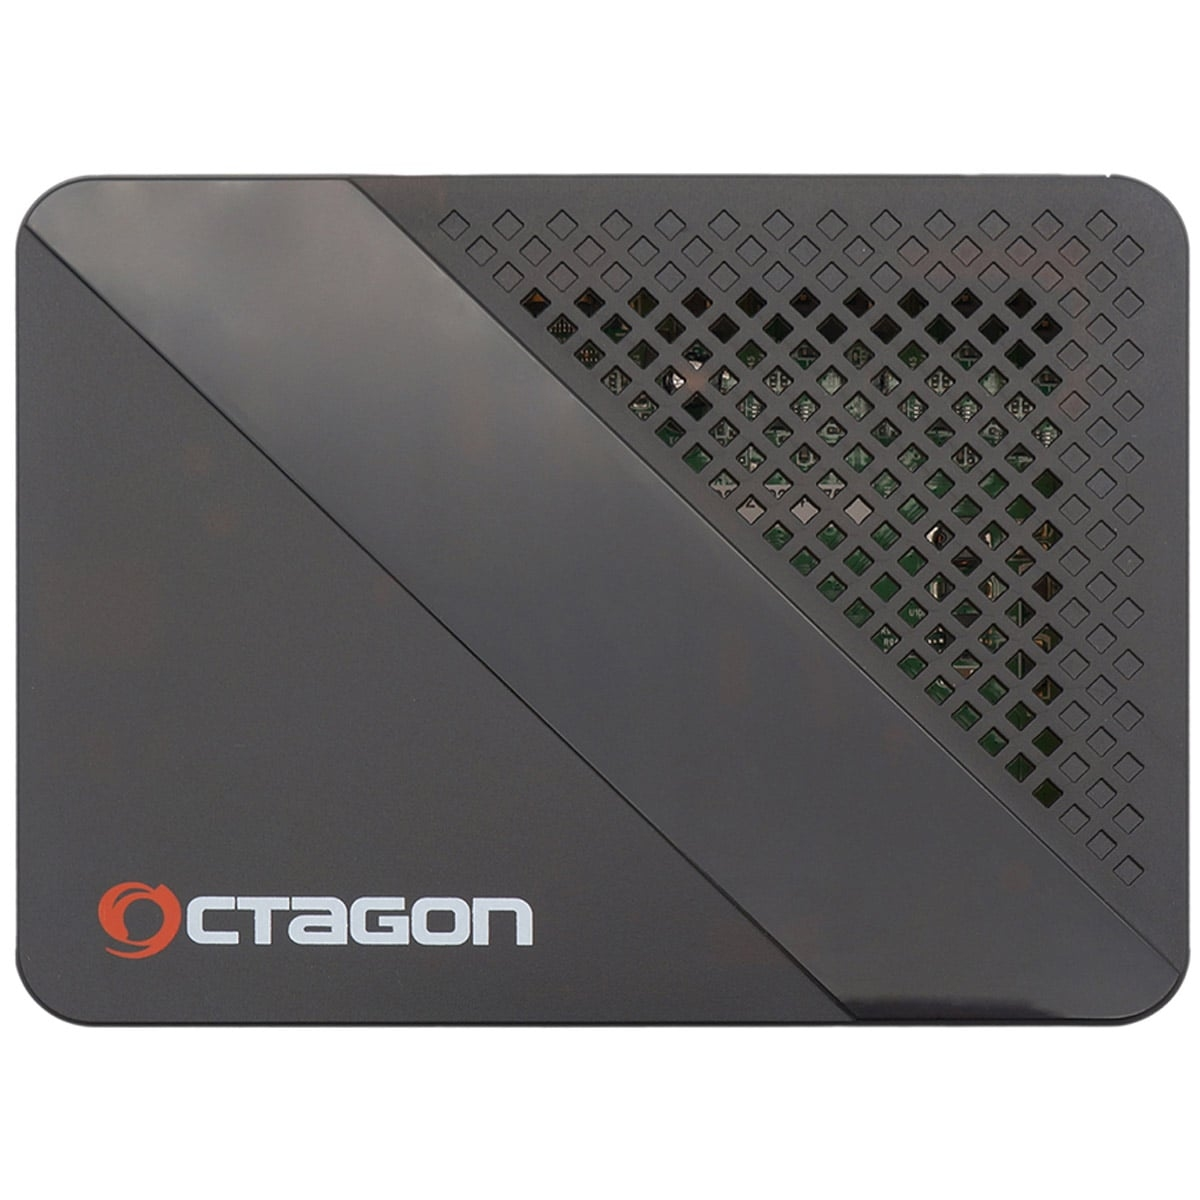 HD Mediaplayer Full OCTAGON Linux H.265 (Schwarz) 1080p Octagon IP-Receiver LAN SX887